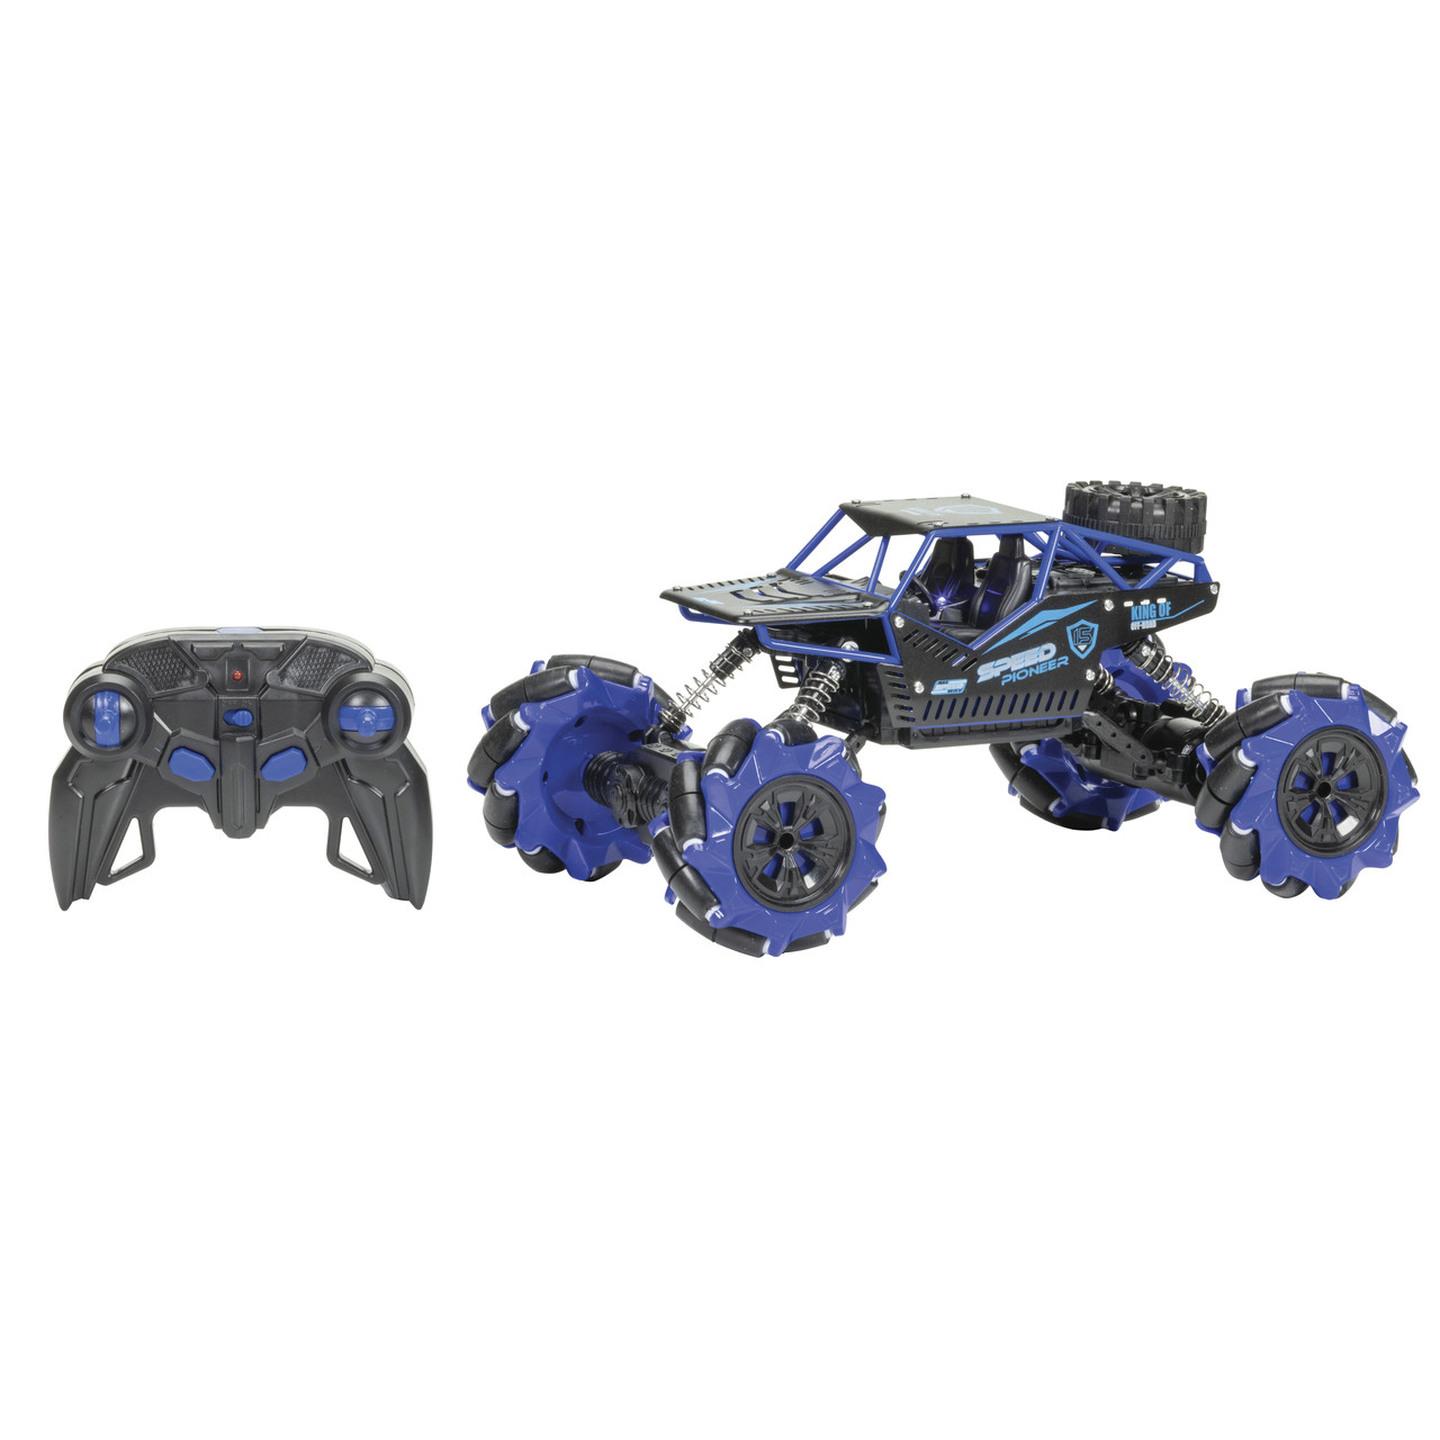 1:16 Scale R/C Rock Crawler with Omni Wheels